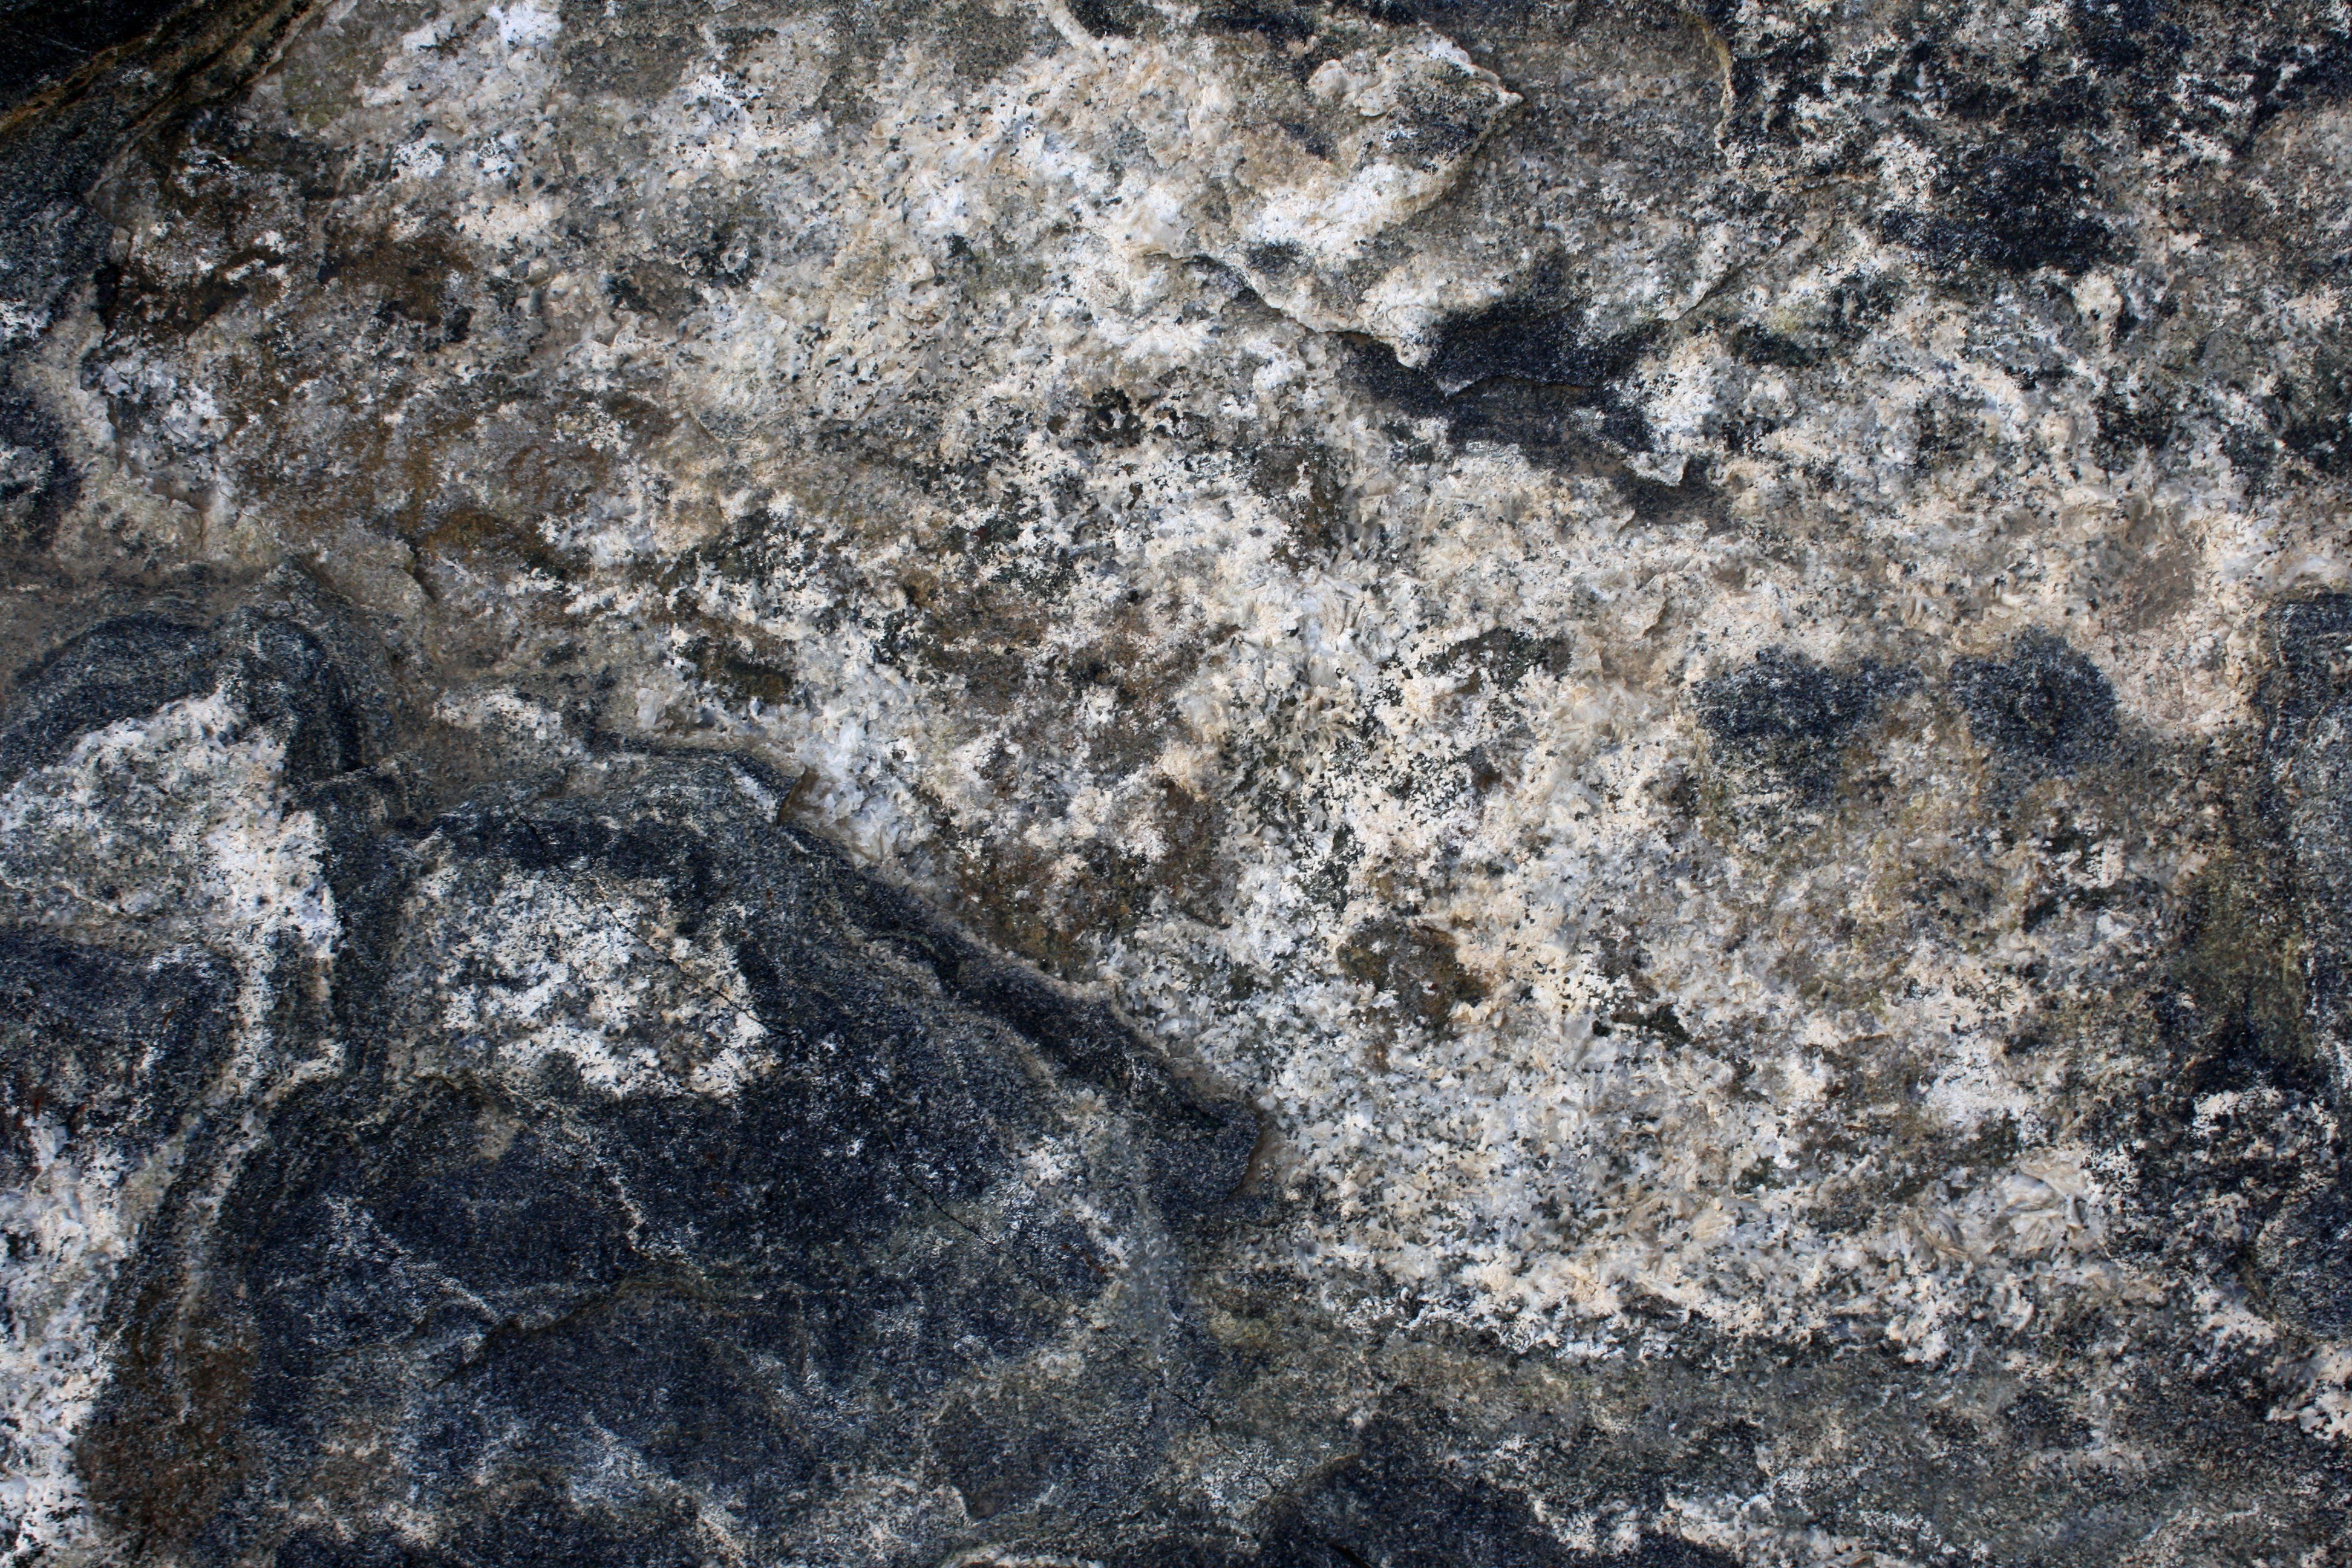 Black and White Metamorphic Rock Texture Picture. Free Photograph. Photo Public Domain